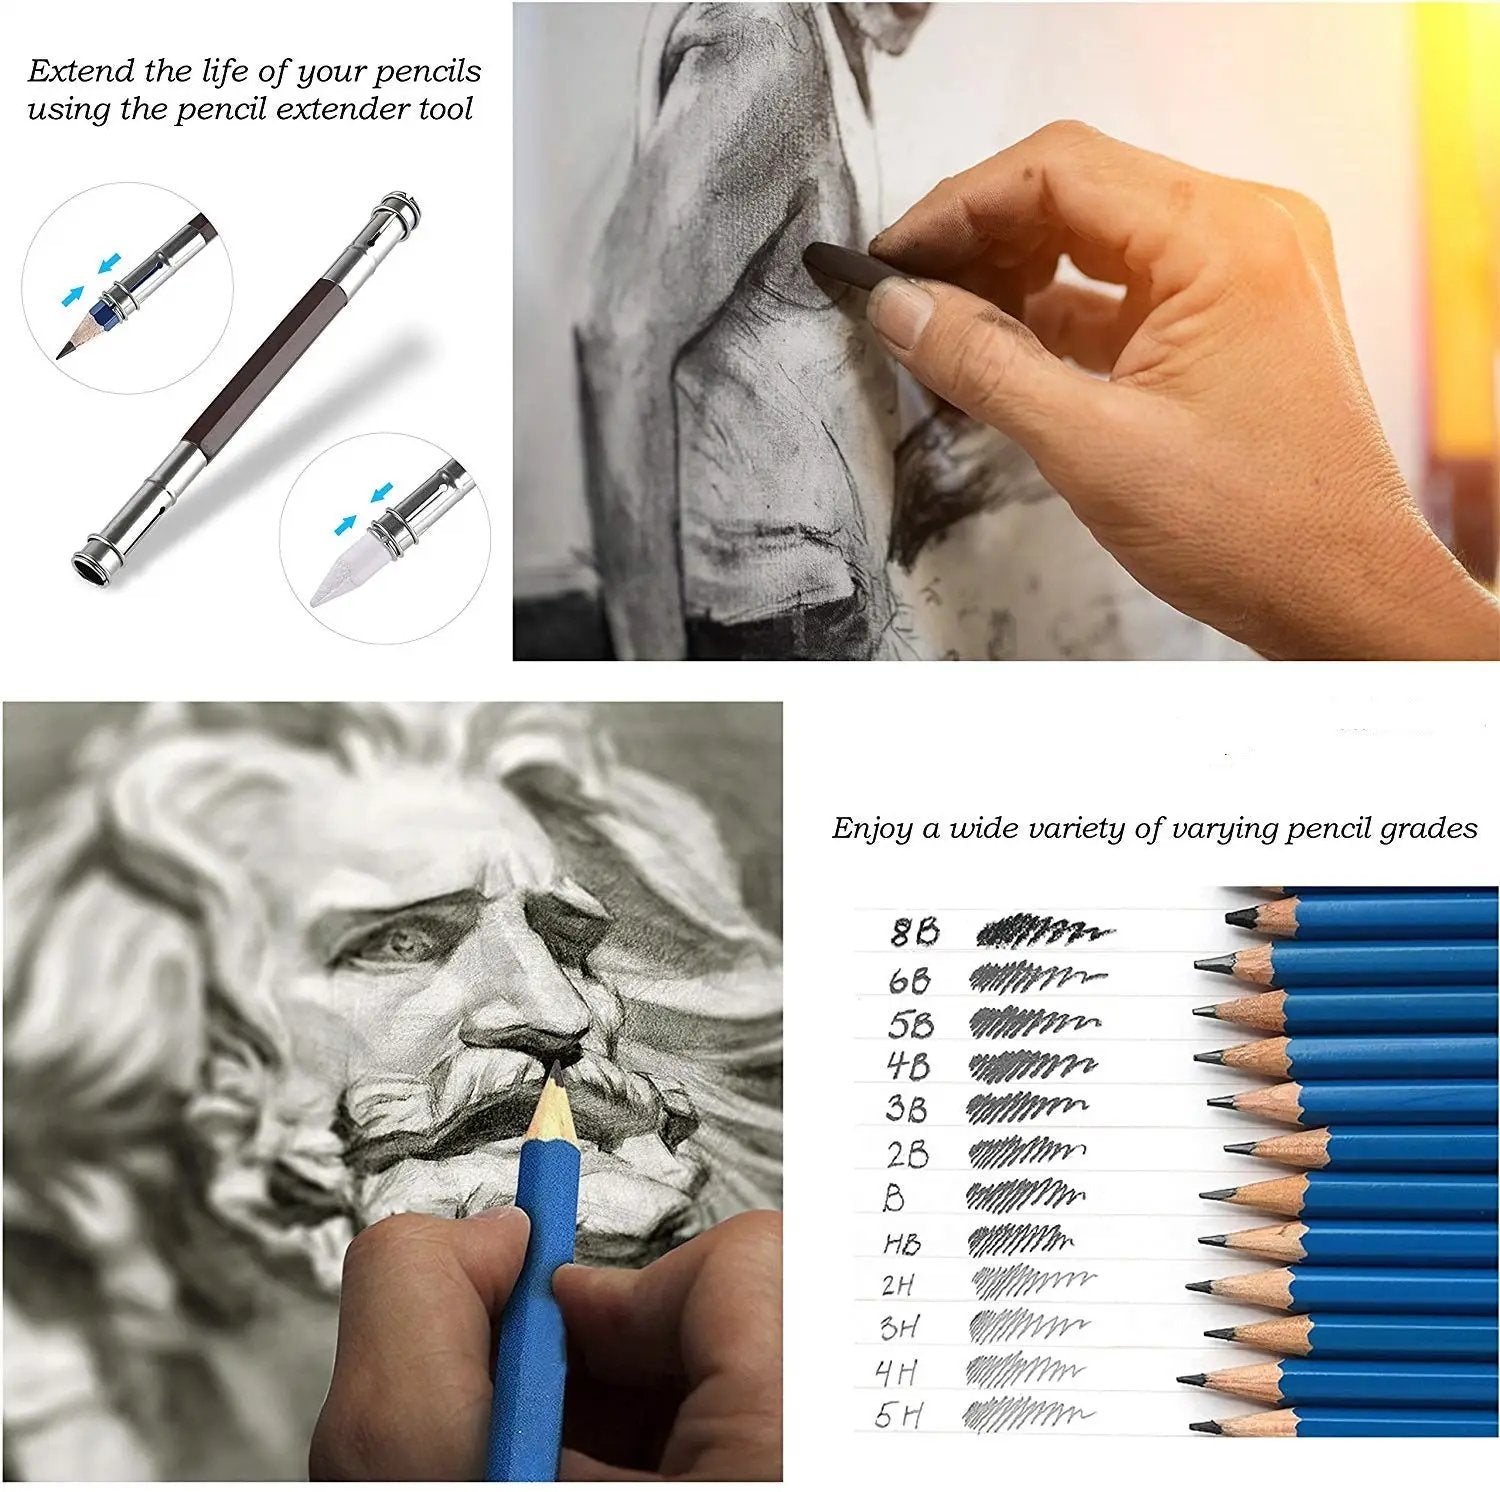 KALOUR 83 Piece Art Drawing Supplies Colored Sketching Pencils Set